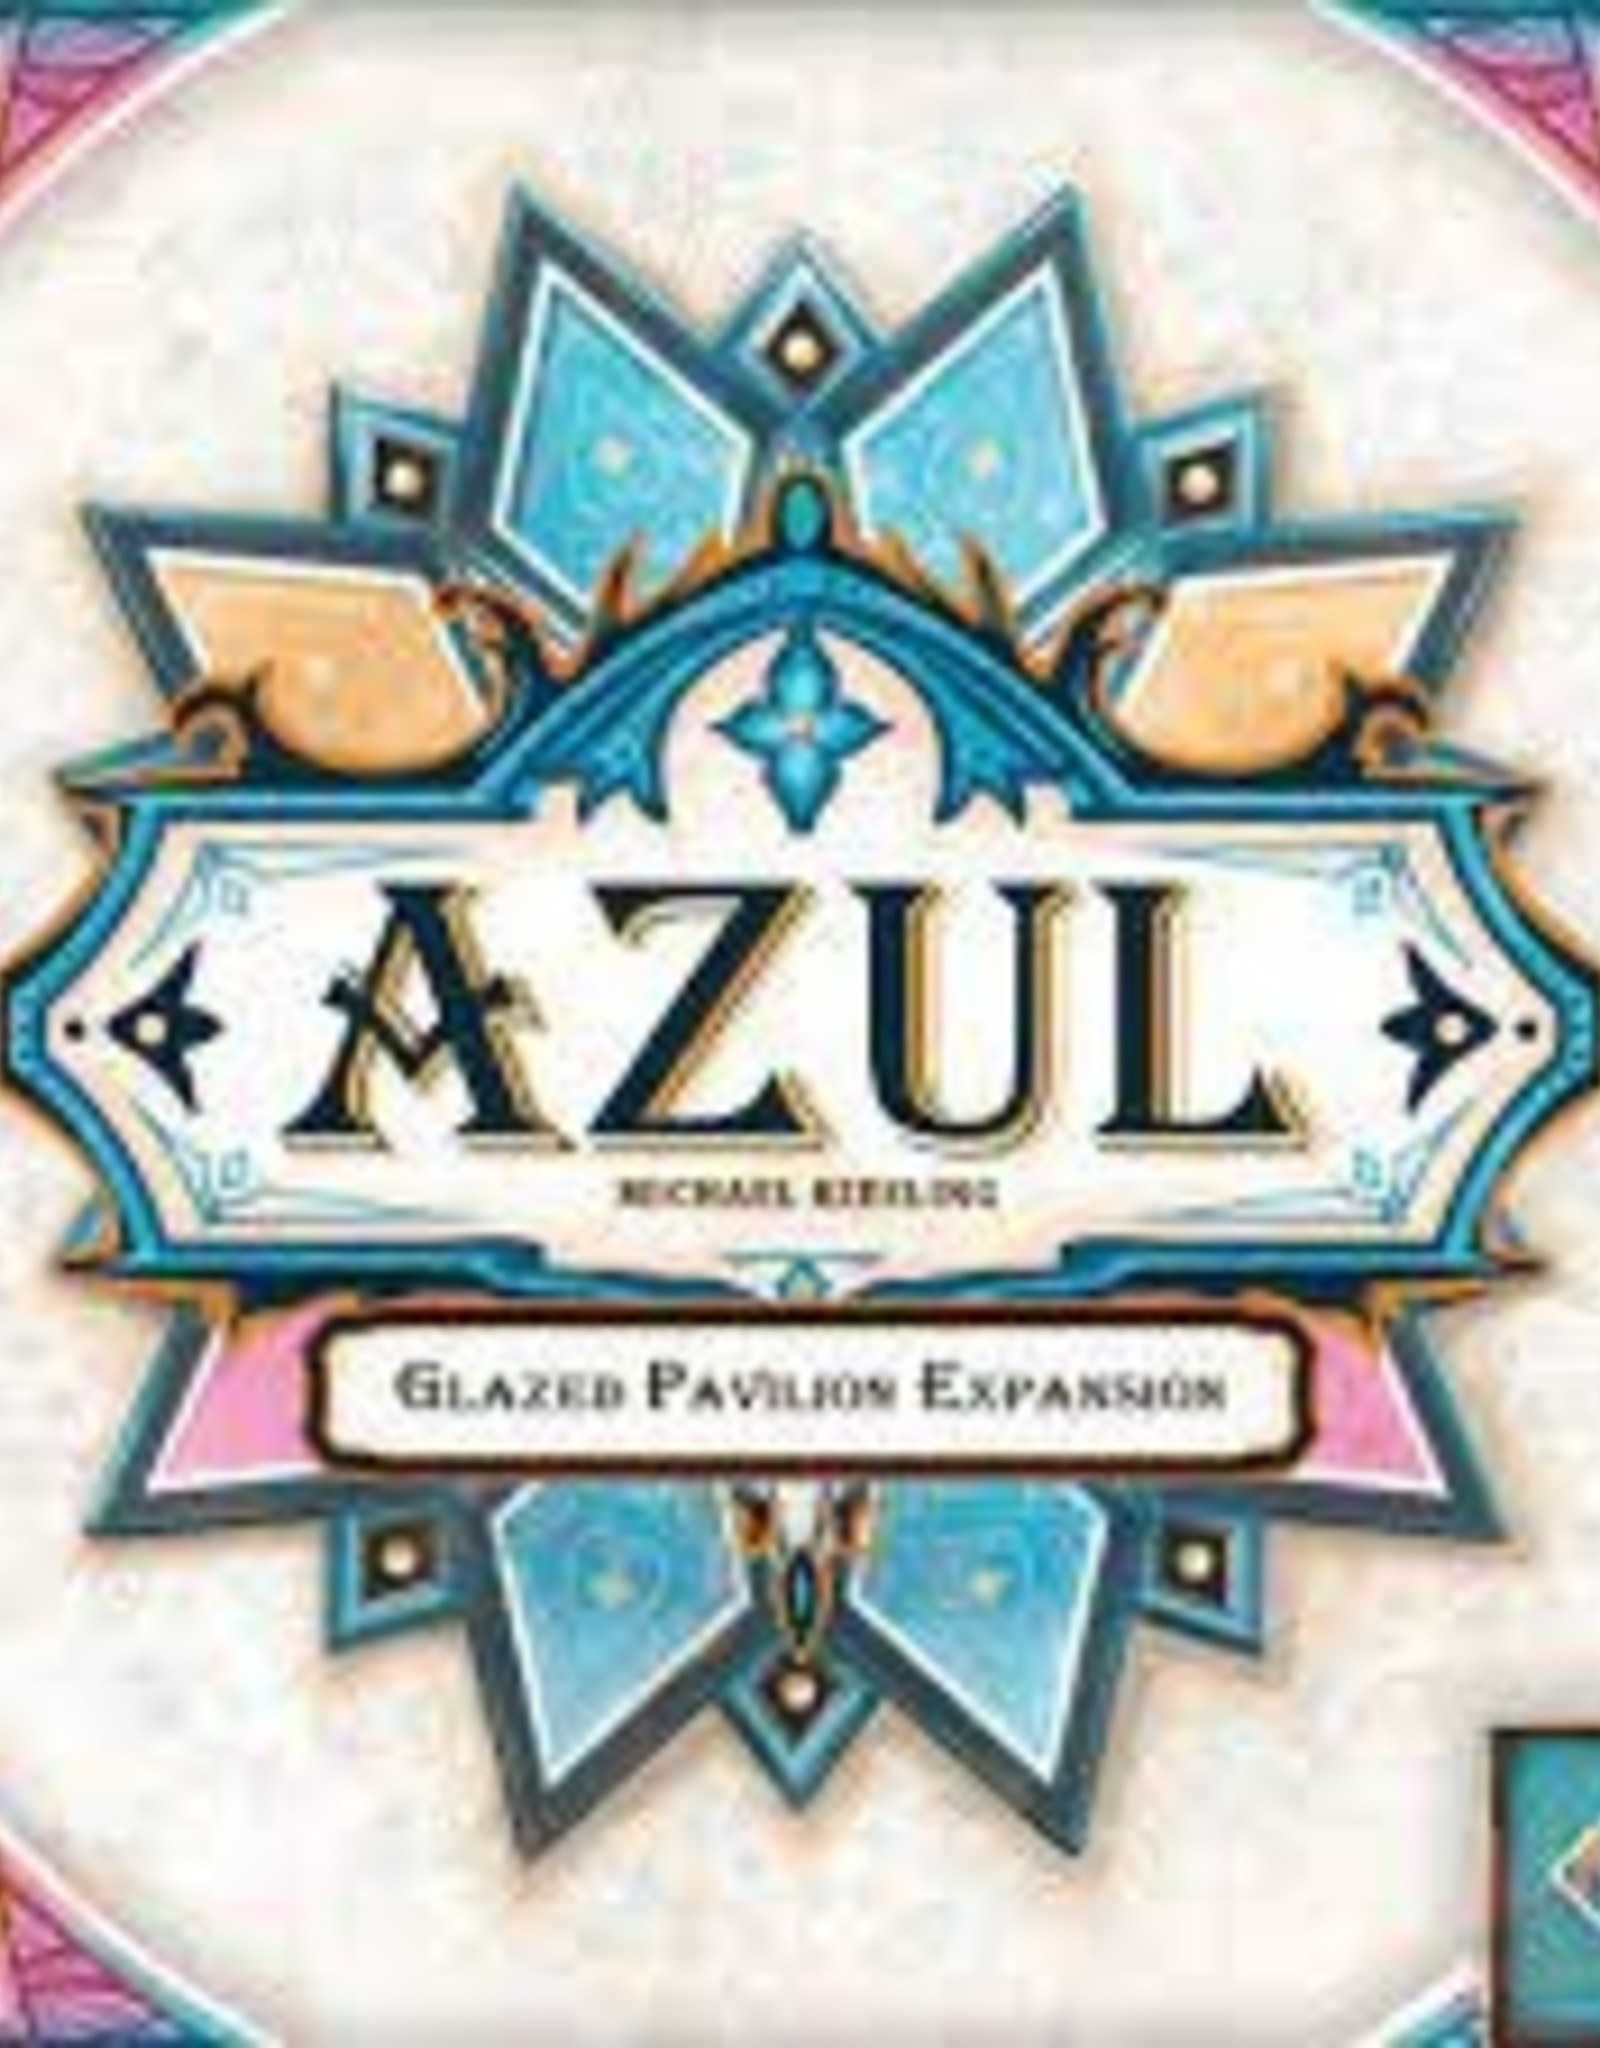 Next Move AZUL - Glazed Pavilion Expansion